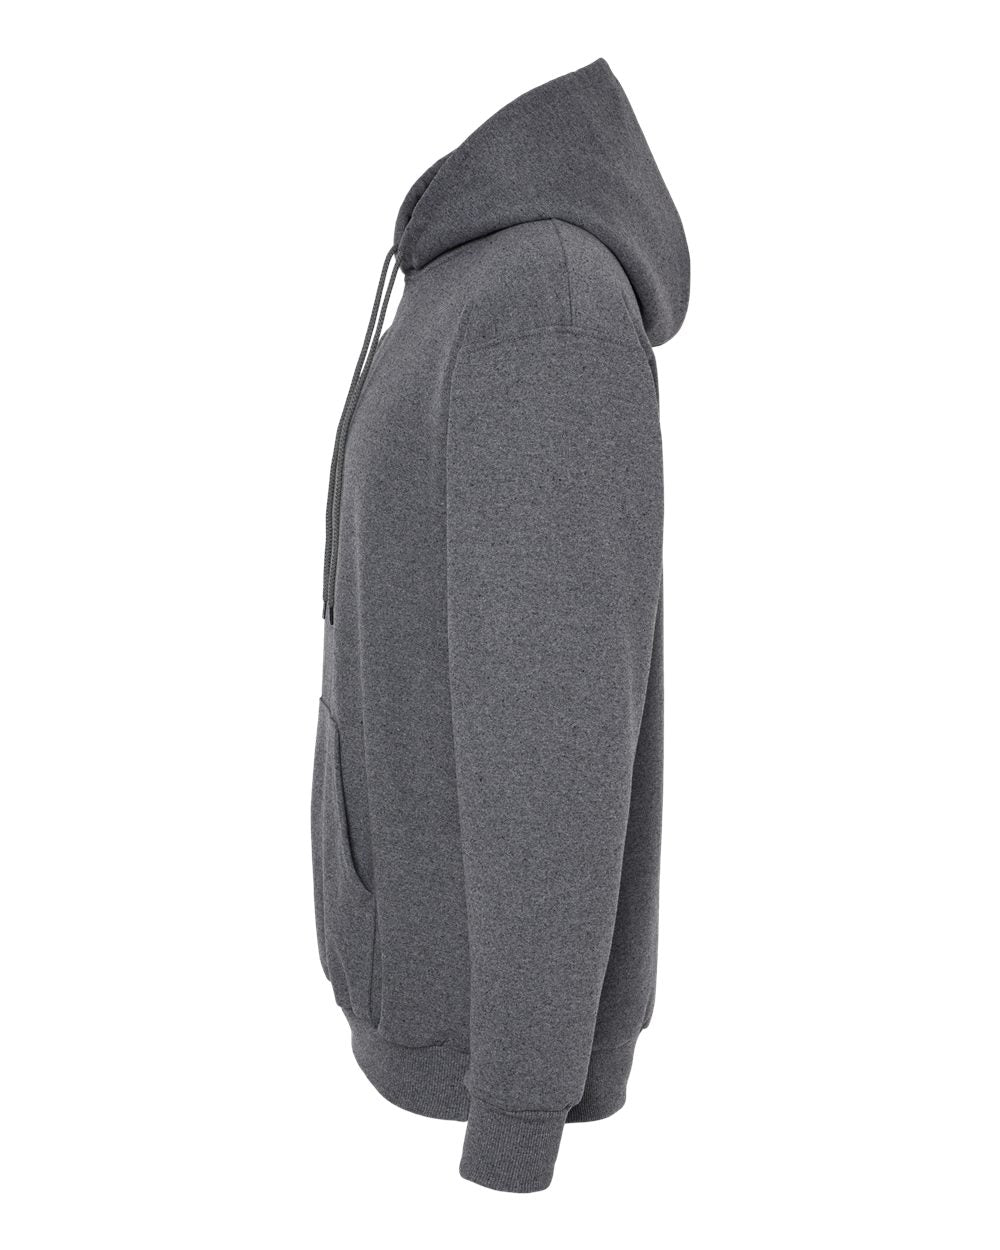 King Fashion Hooded Sweatshirt KF9011 #color_Charcoal Mix